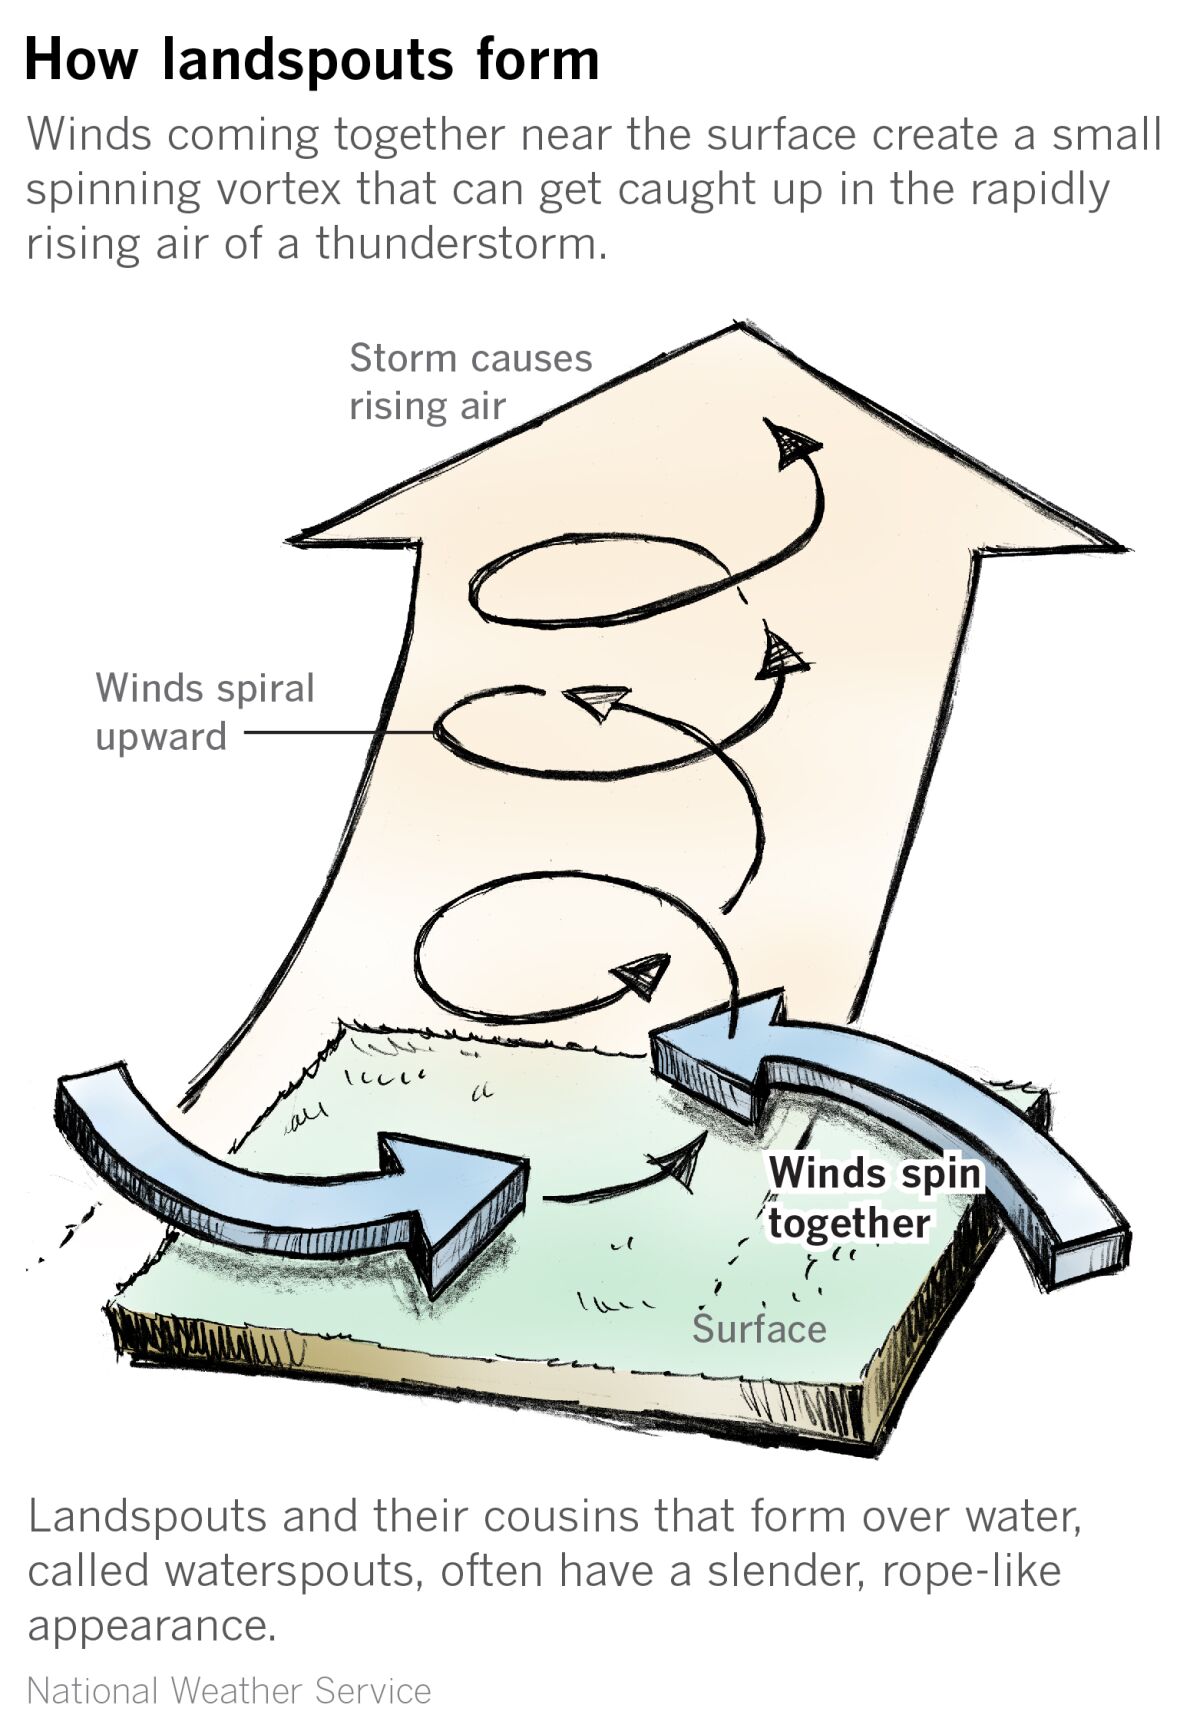 Explainer of how a landspout (type of weak tornado) forms